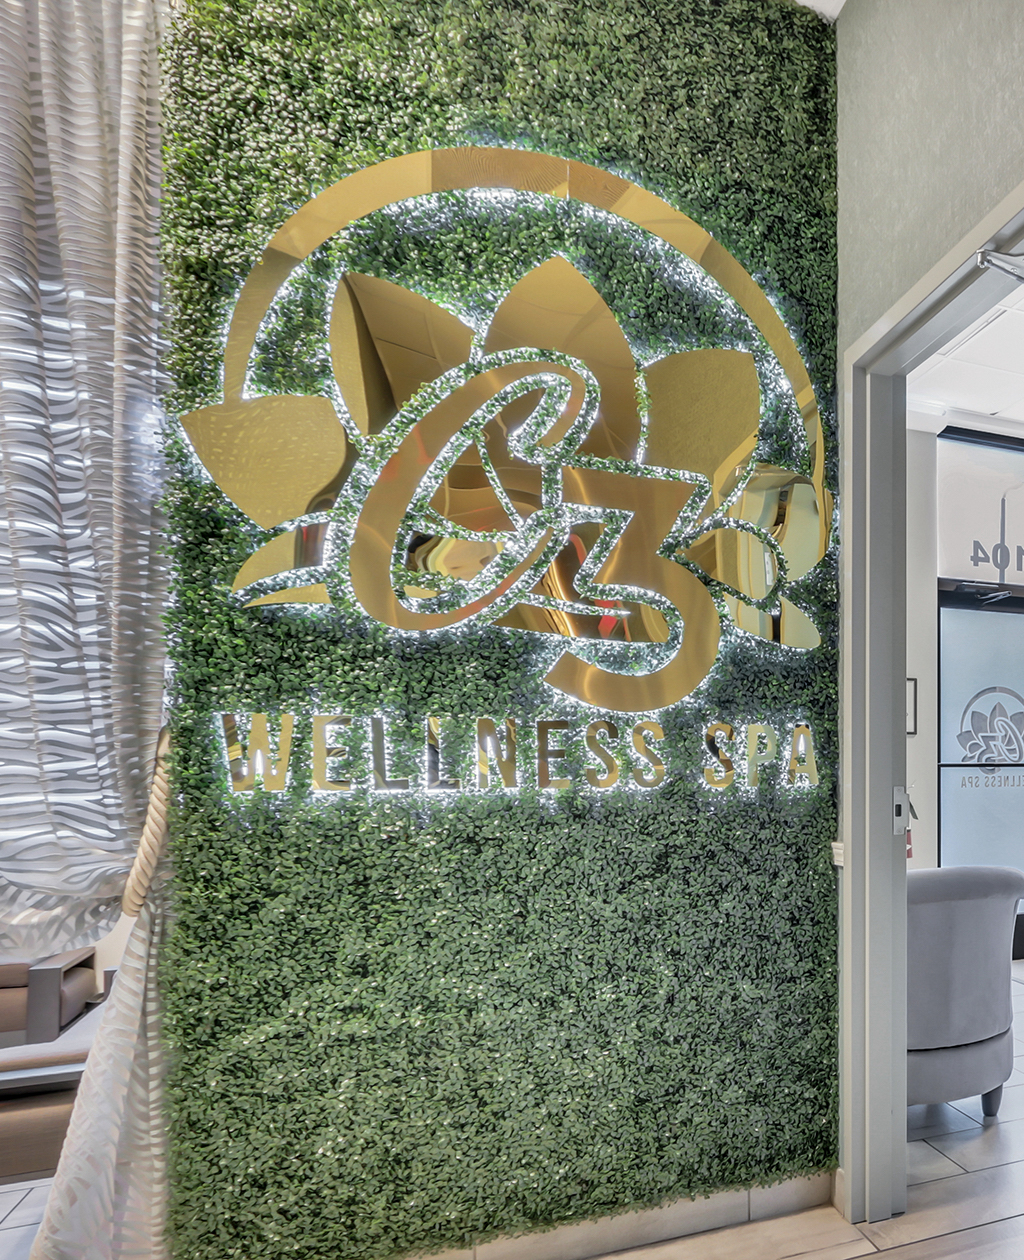 C3 Wellness Spa interior